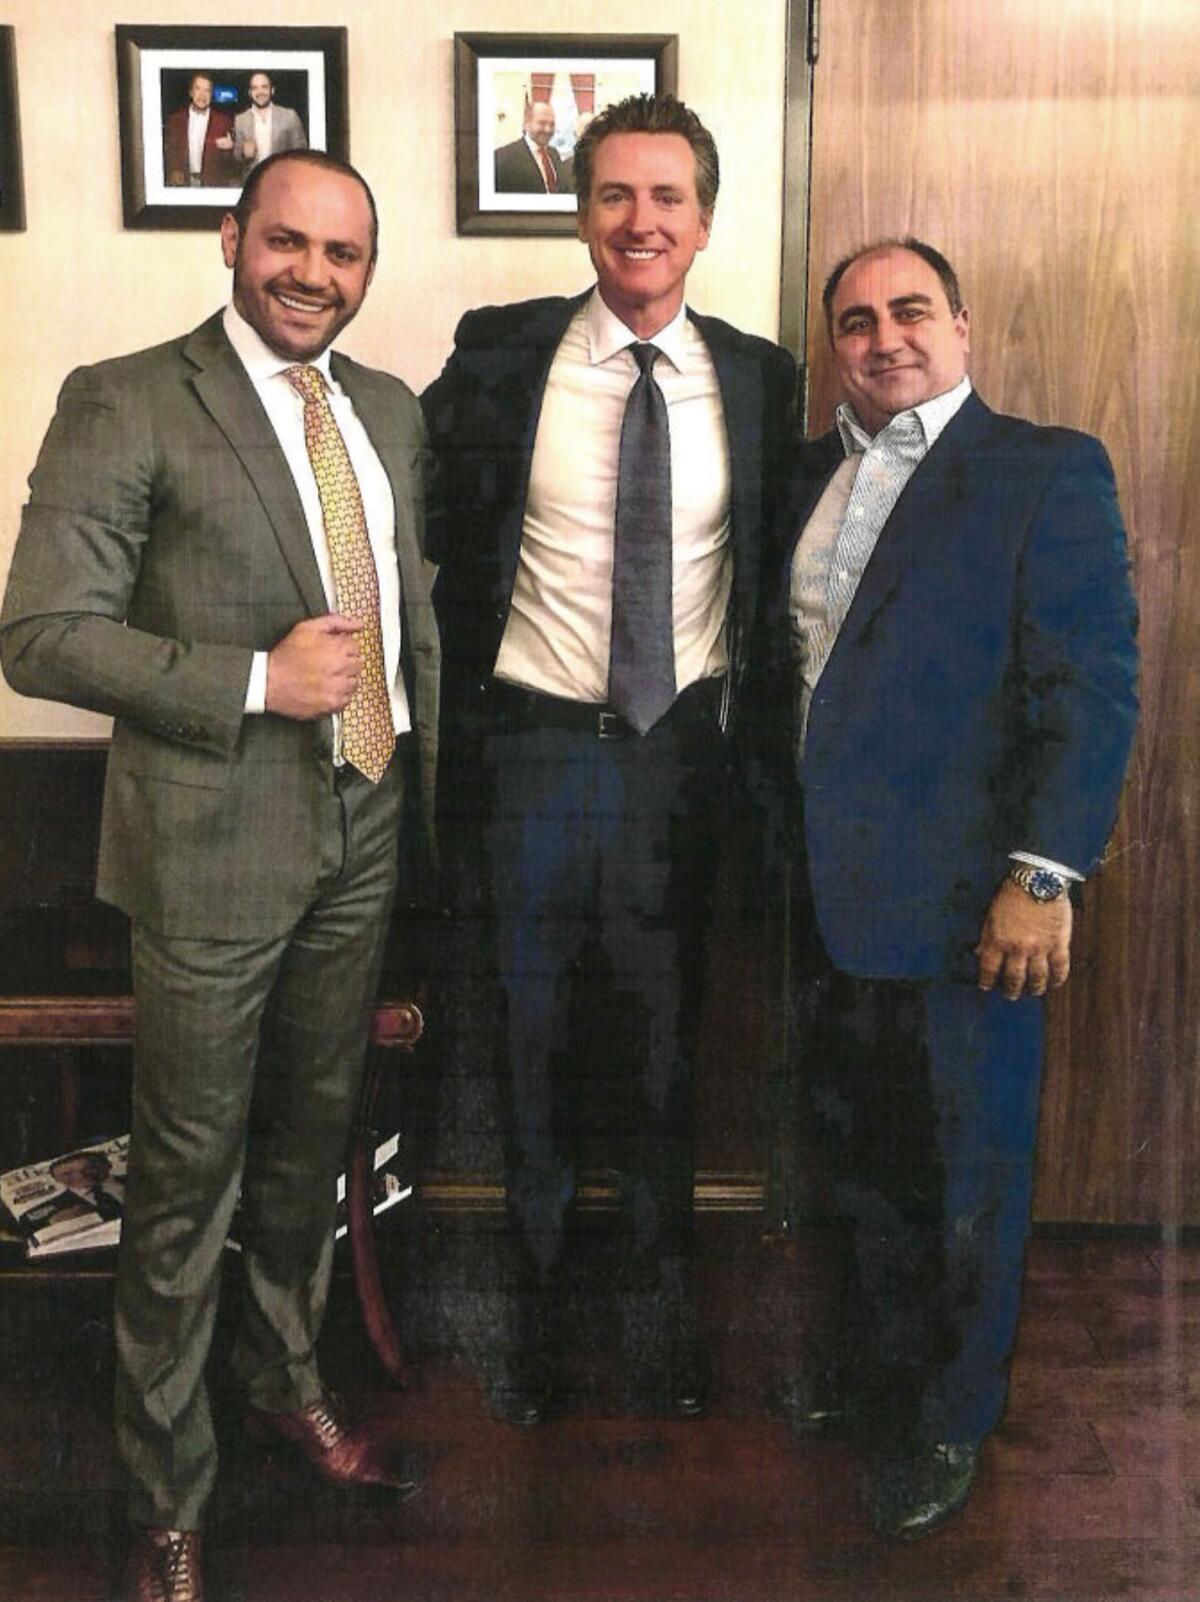  Edgar Sargsyan and John Balian posing with Gavin Newsom 